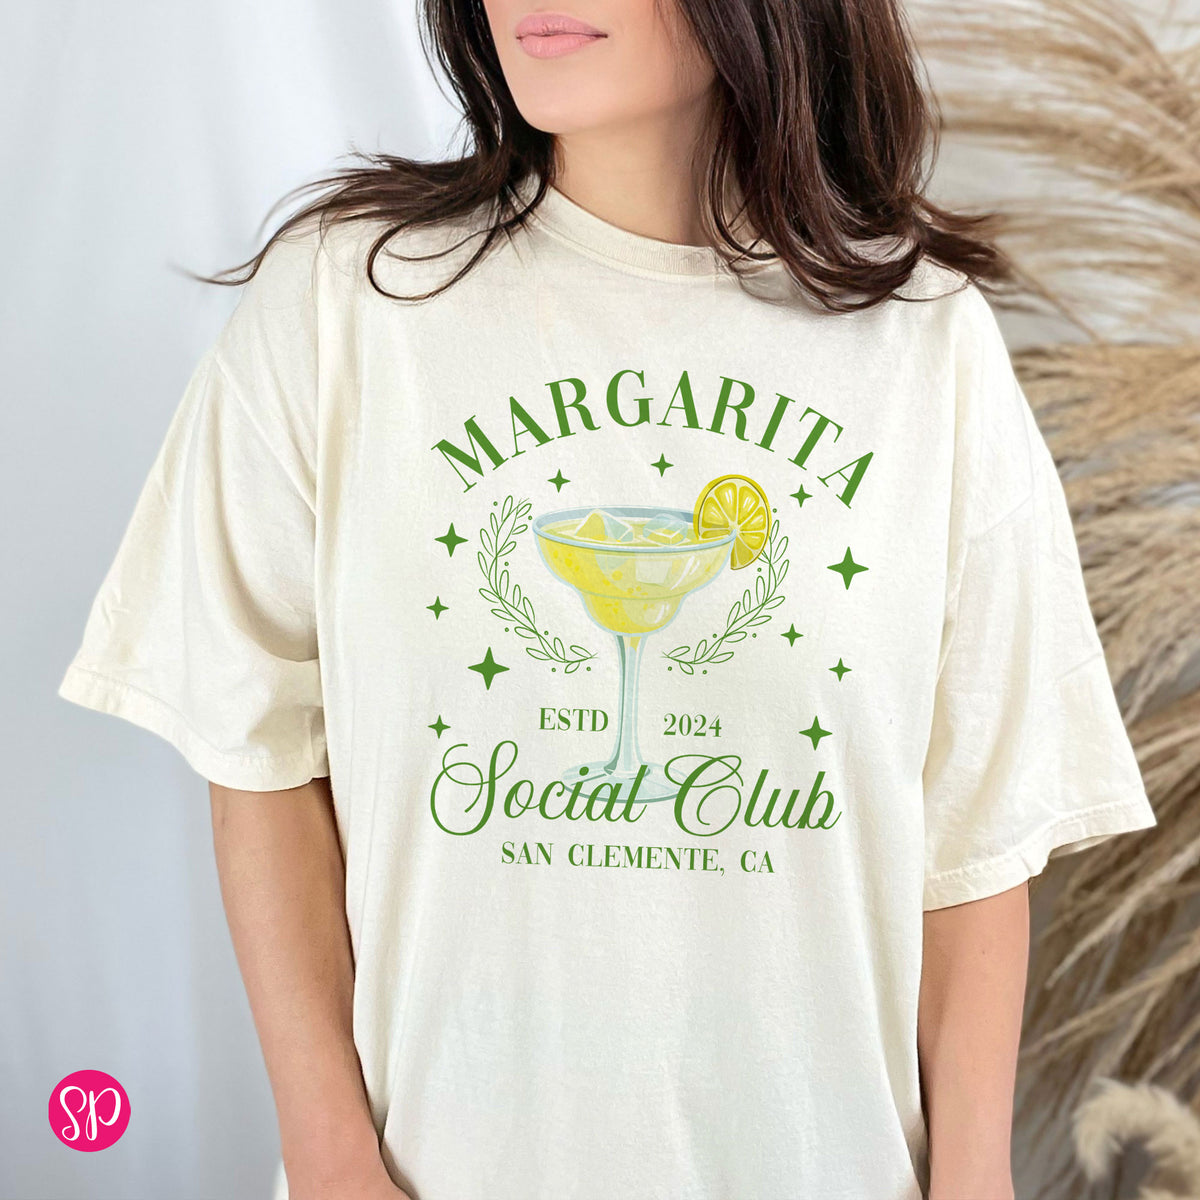 Margarita Social Club Comfort Colors T-Shirt